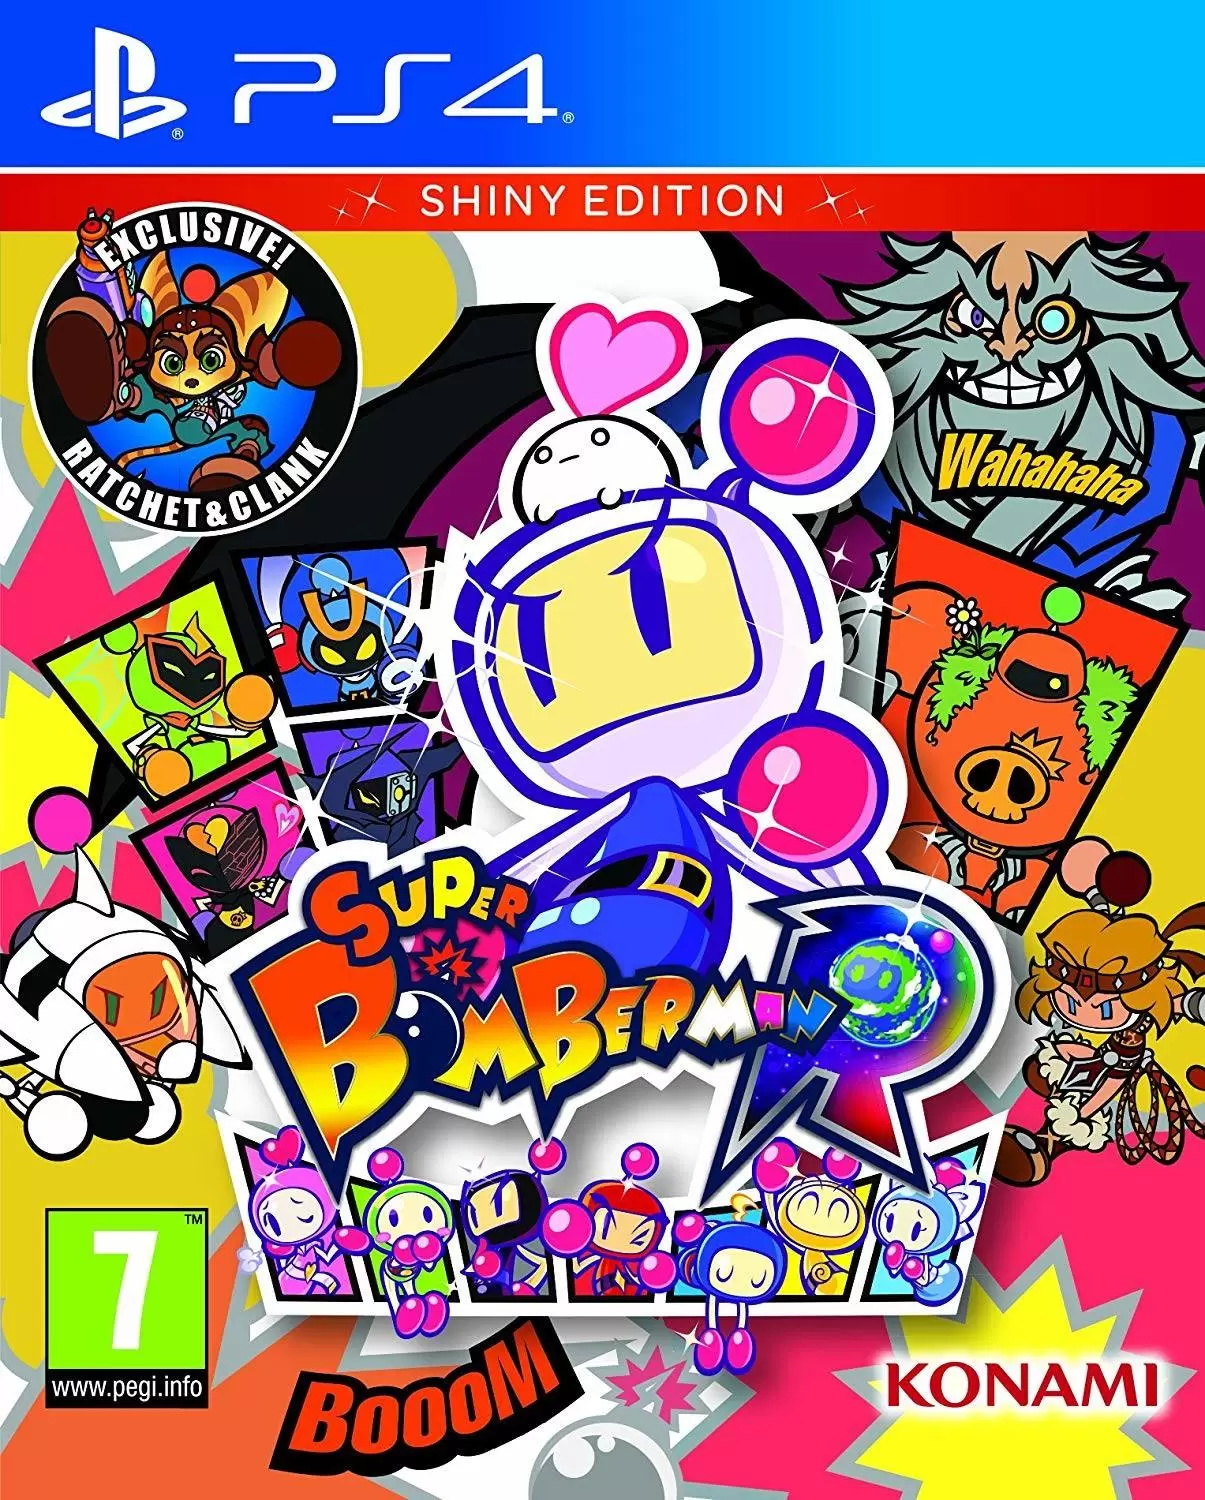 PS4 Games - Super Bomberman Edition R-Shiny